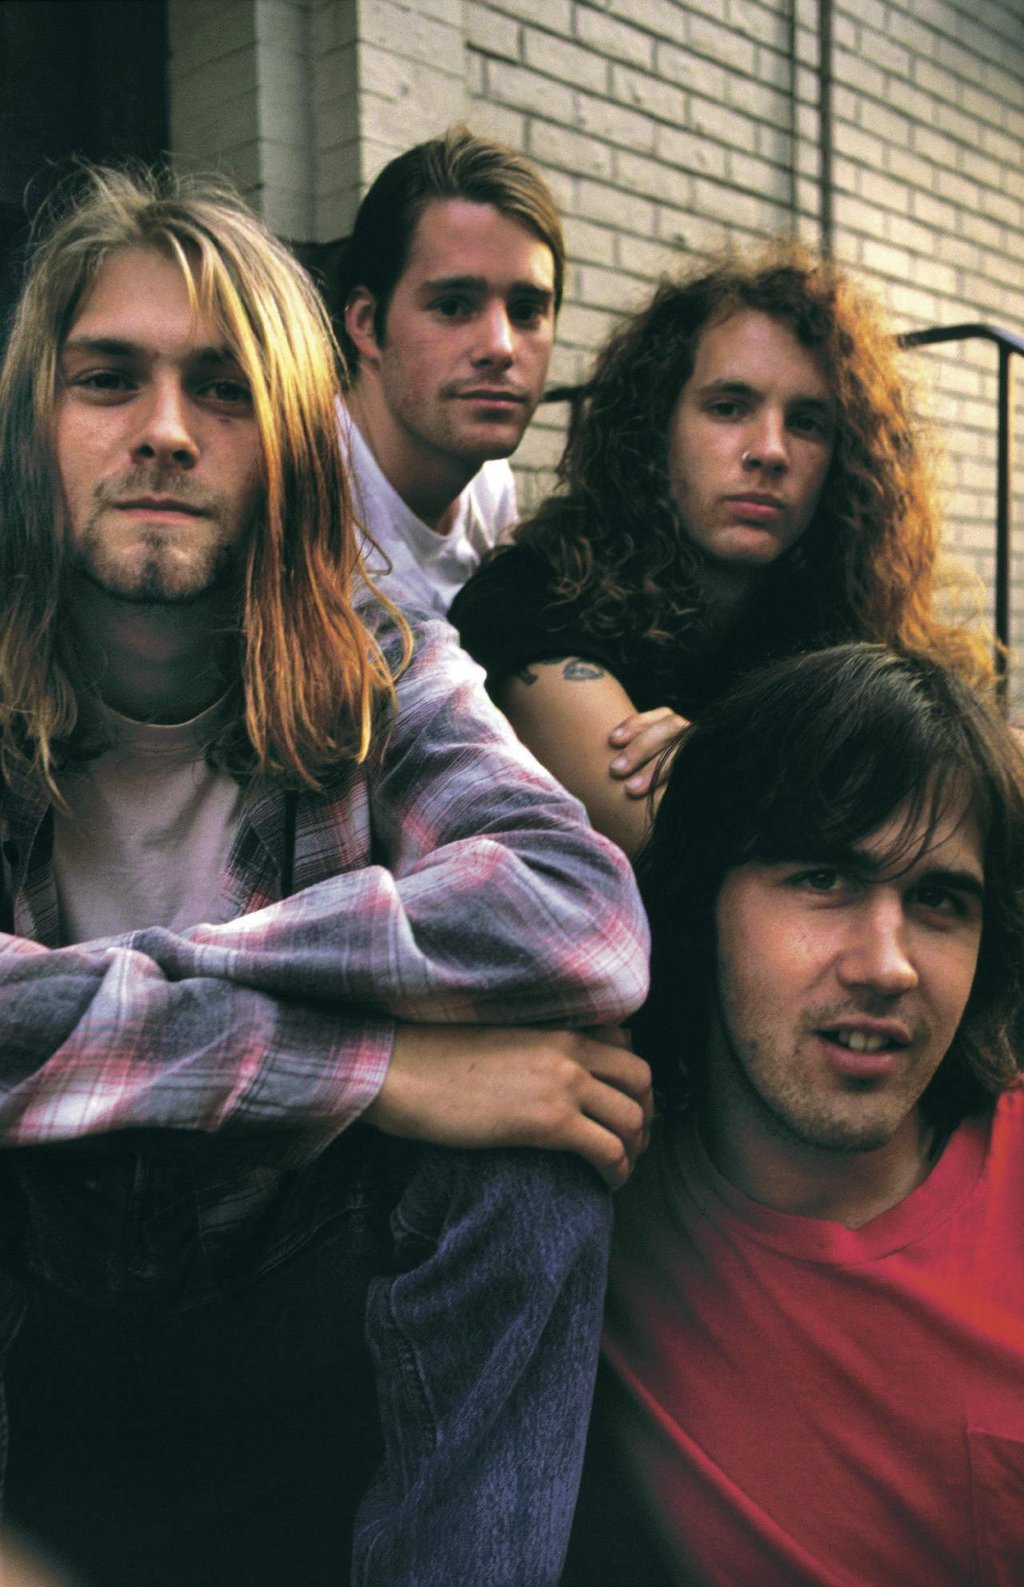 1994: Se quita la vida Kurt Cobain, líder de Nirvana e iniciador del movimiento grunge